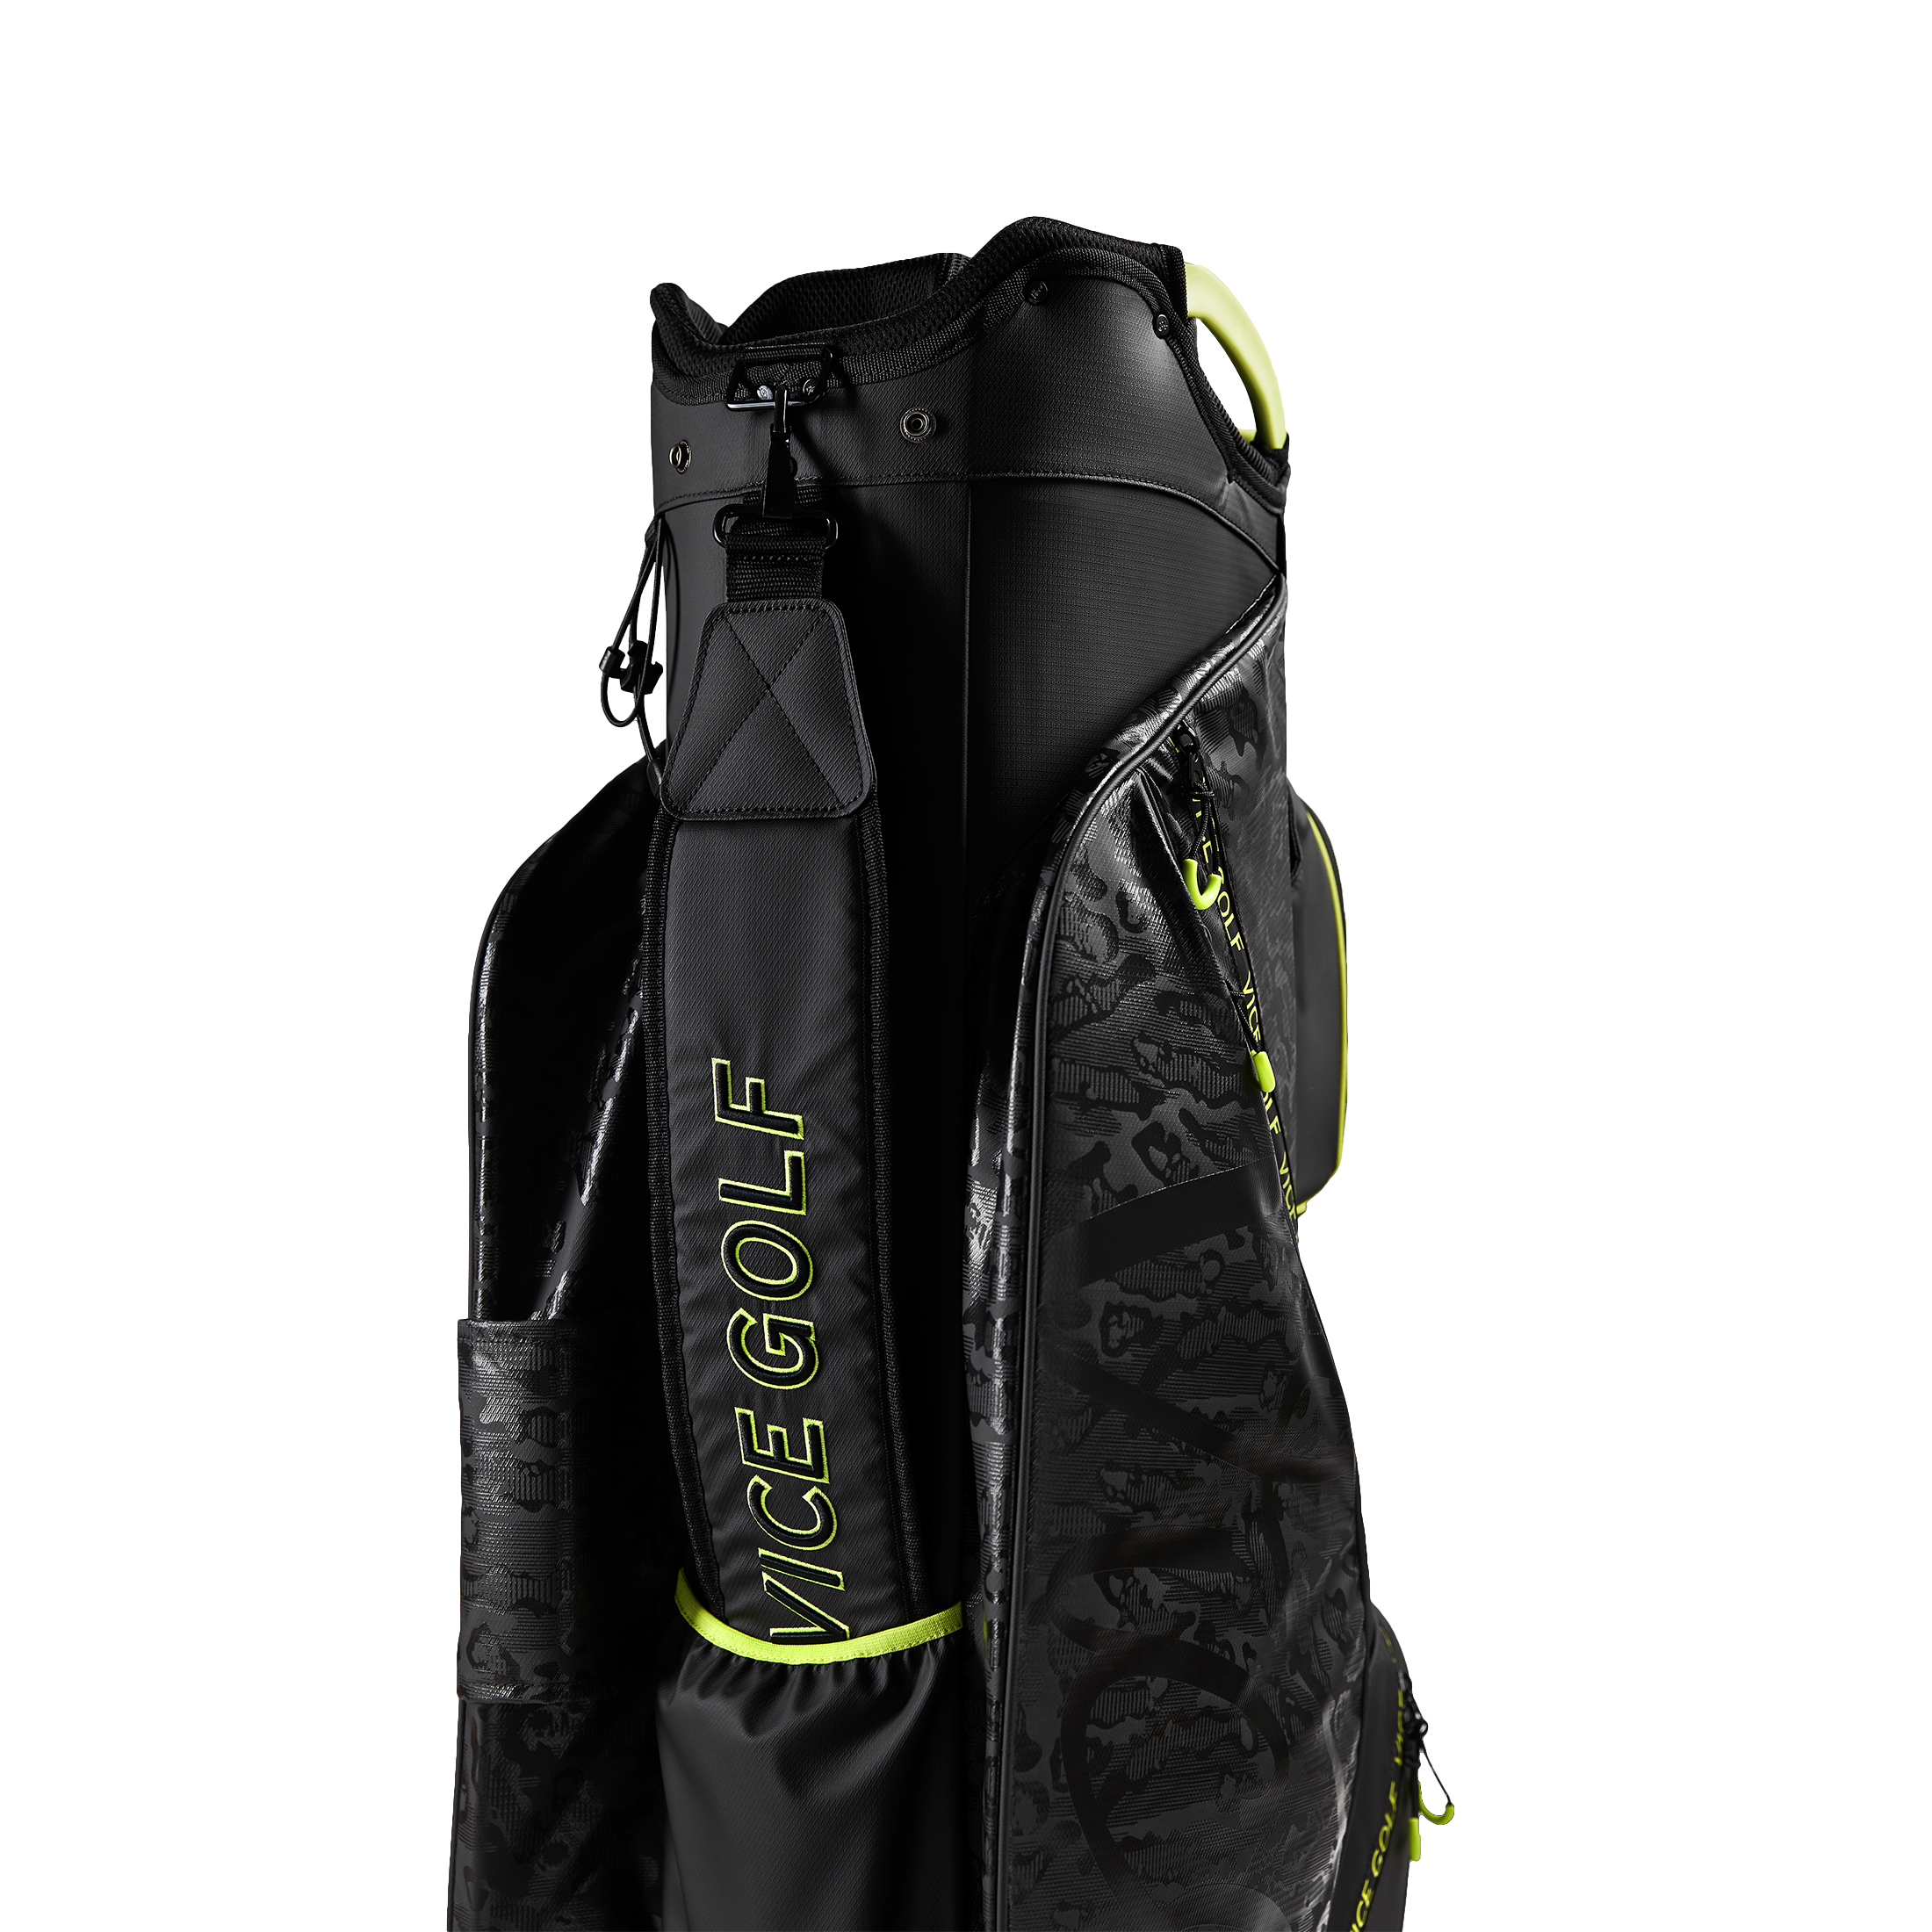 Vice Golf Cruiser Cart Golf Bag, Black/Lime, 15 Way Divider - image 4 of 8